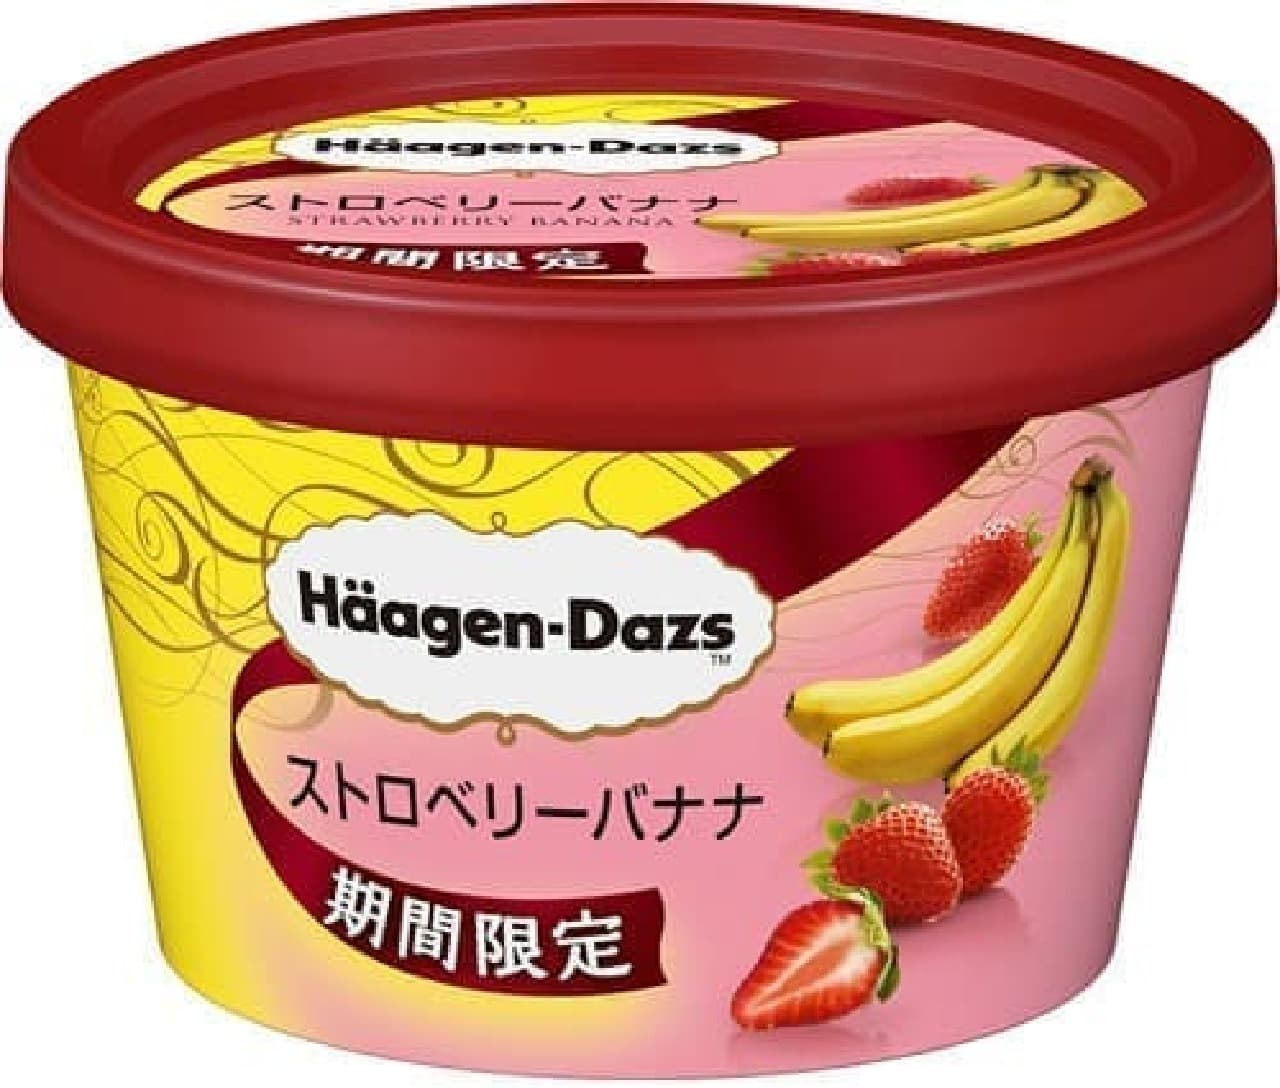 New mini cup "Strawberry Banana"